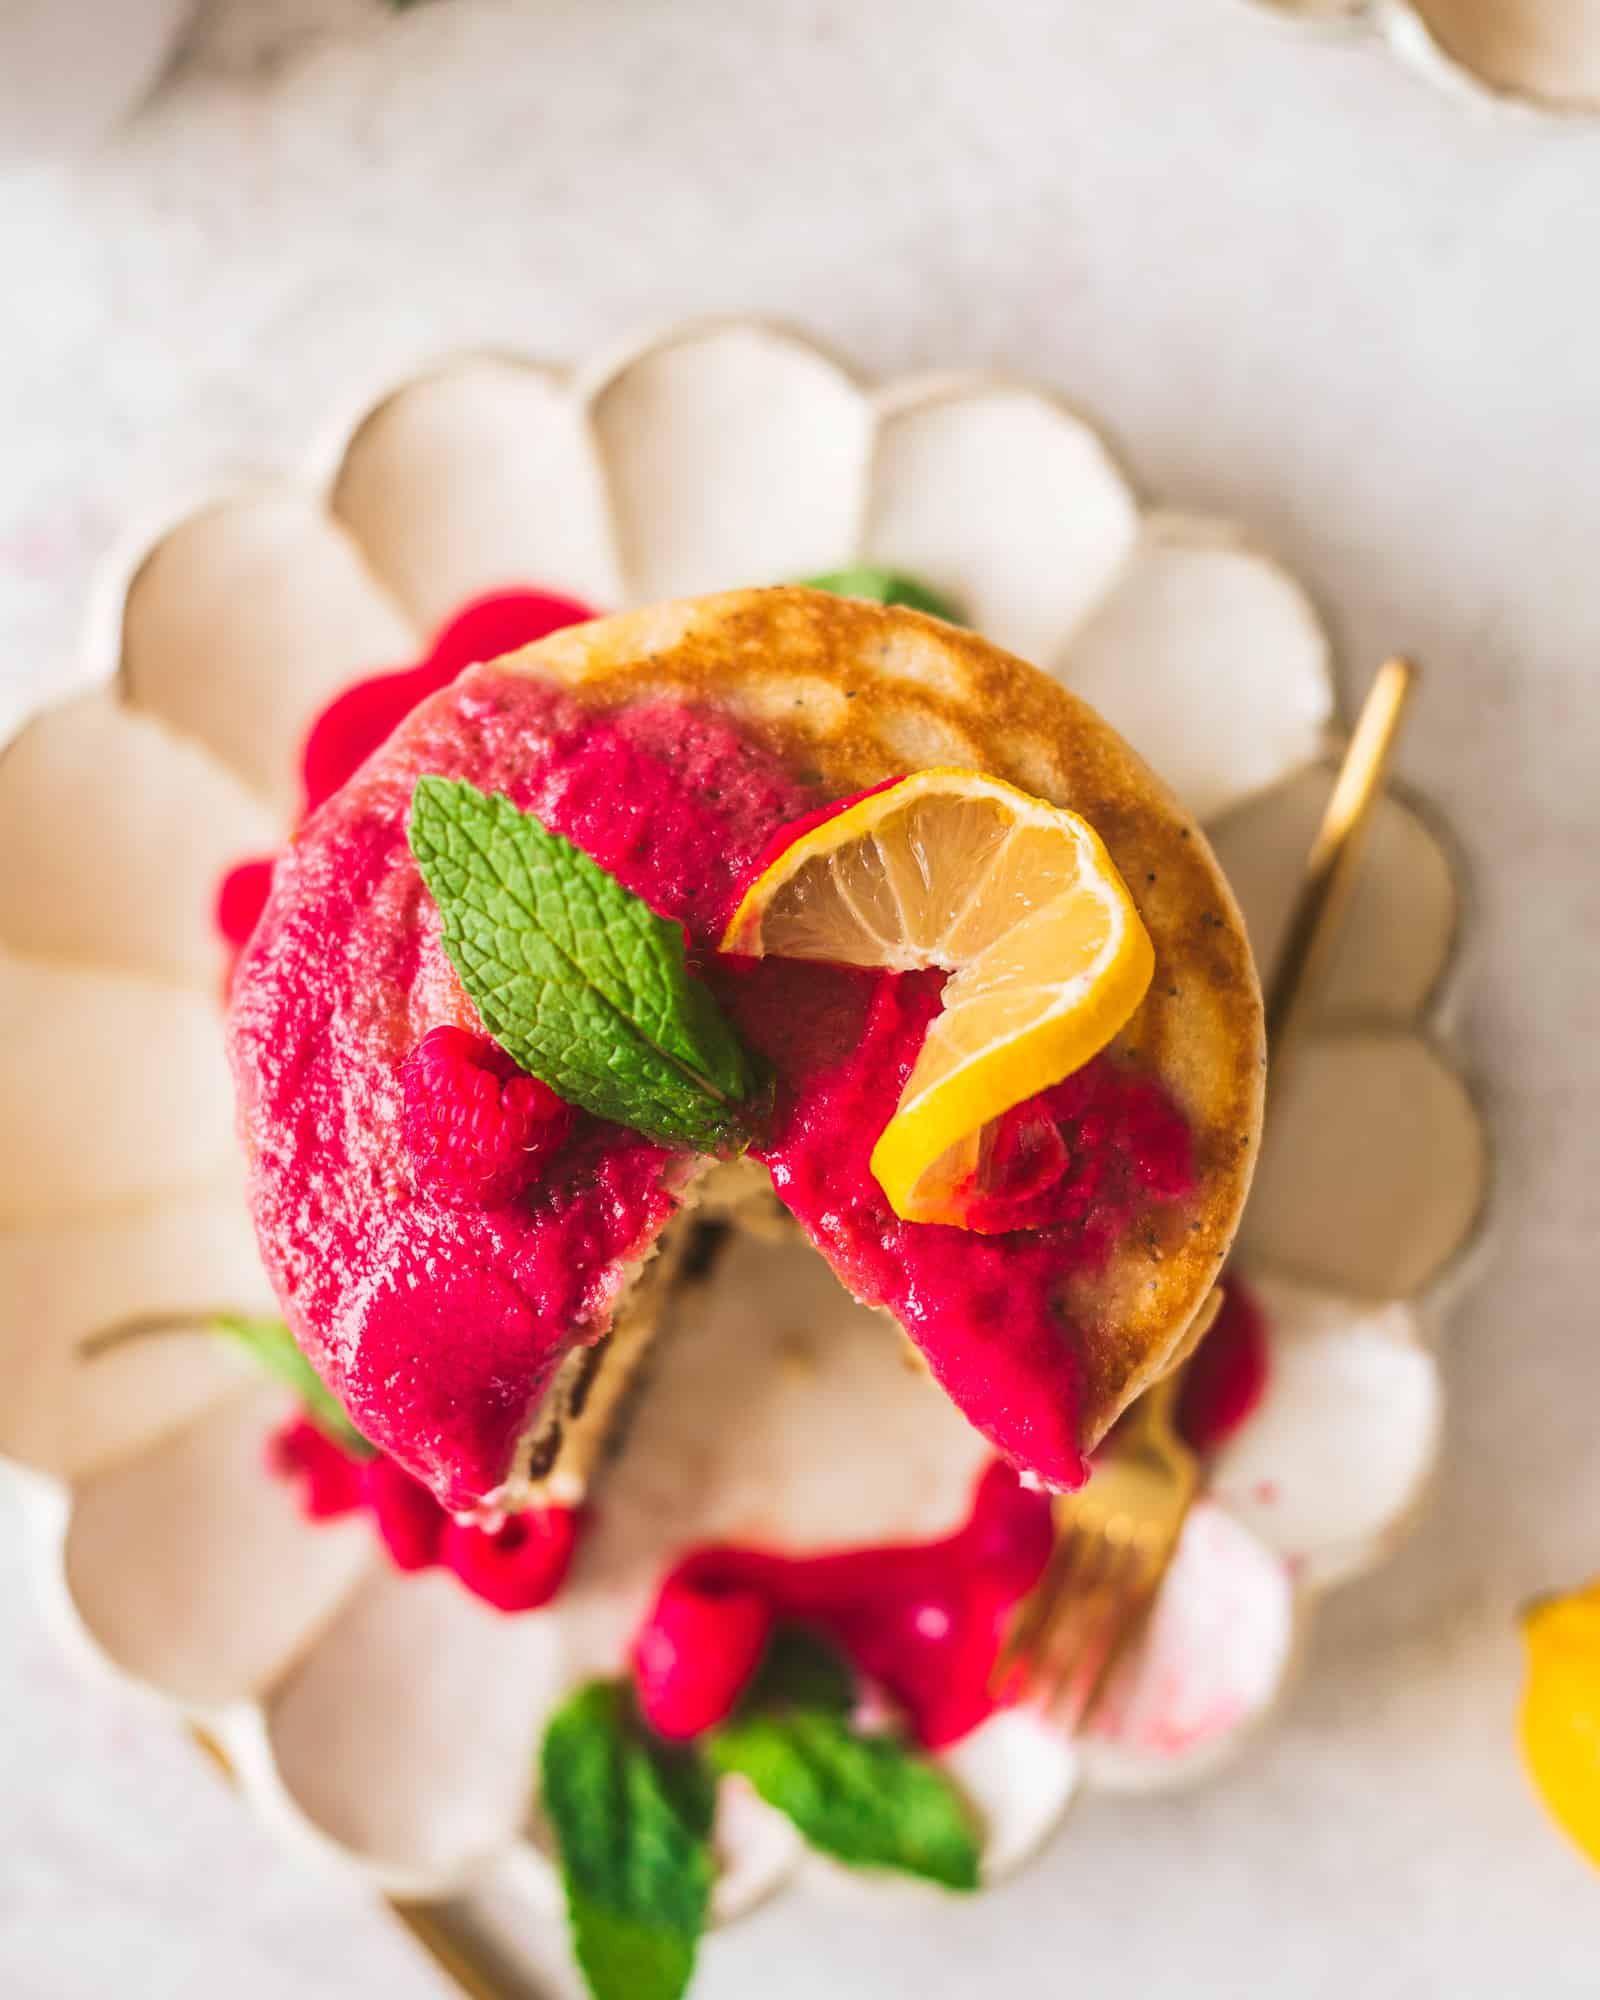 Lemon poppyseed pancakes on a plate with lemons and raspberries